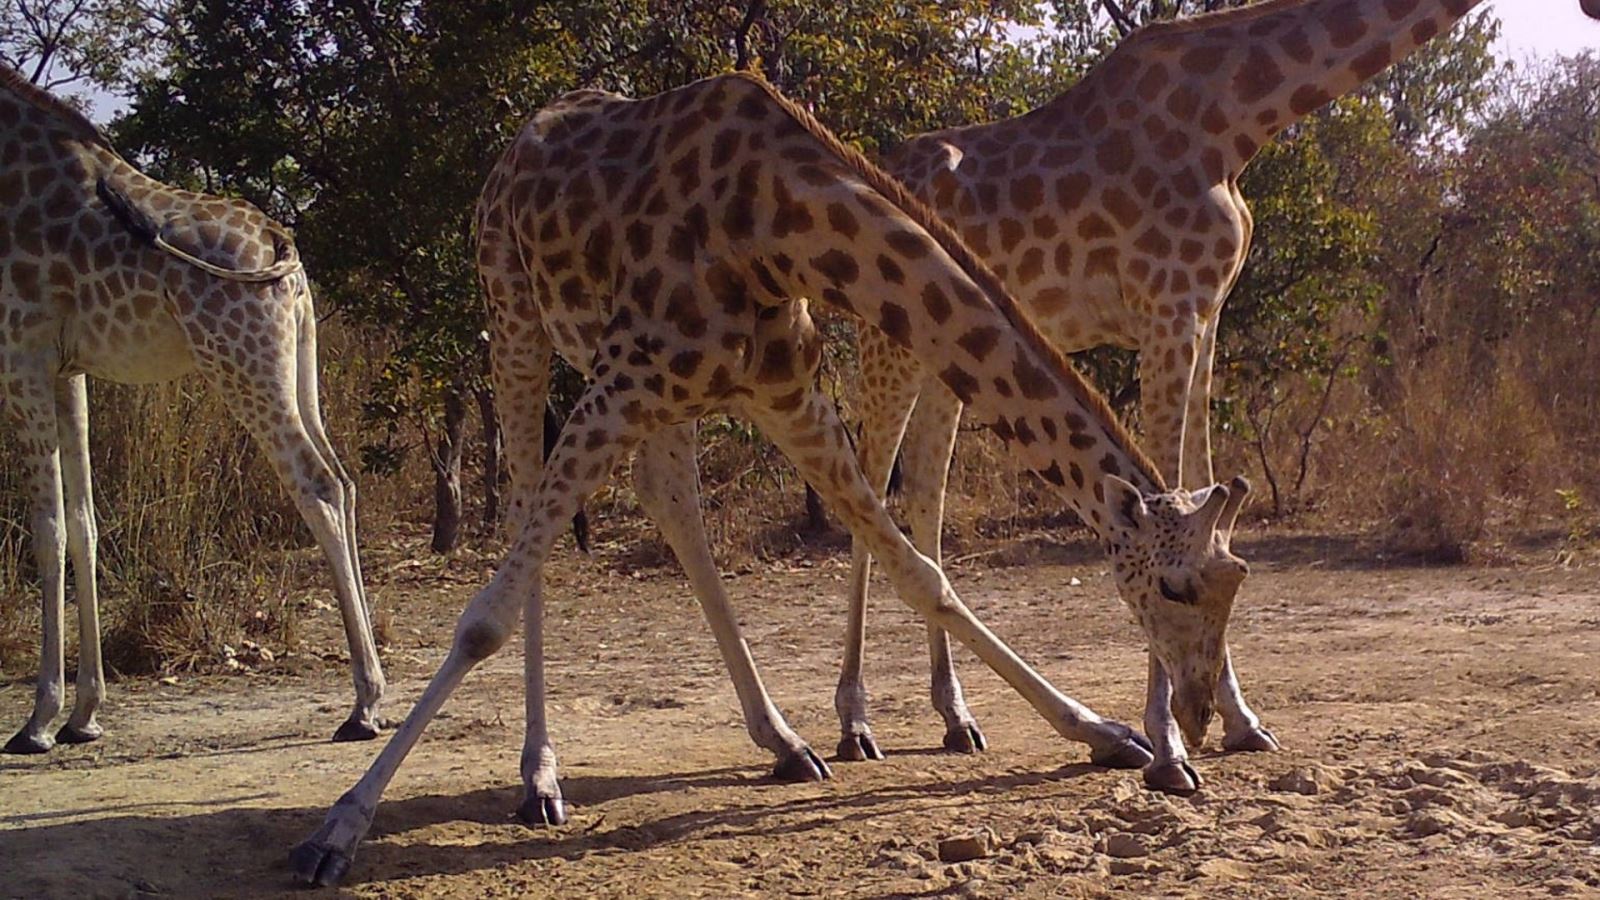 A giraffe in the wild, in Cameroon